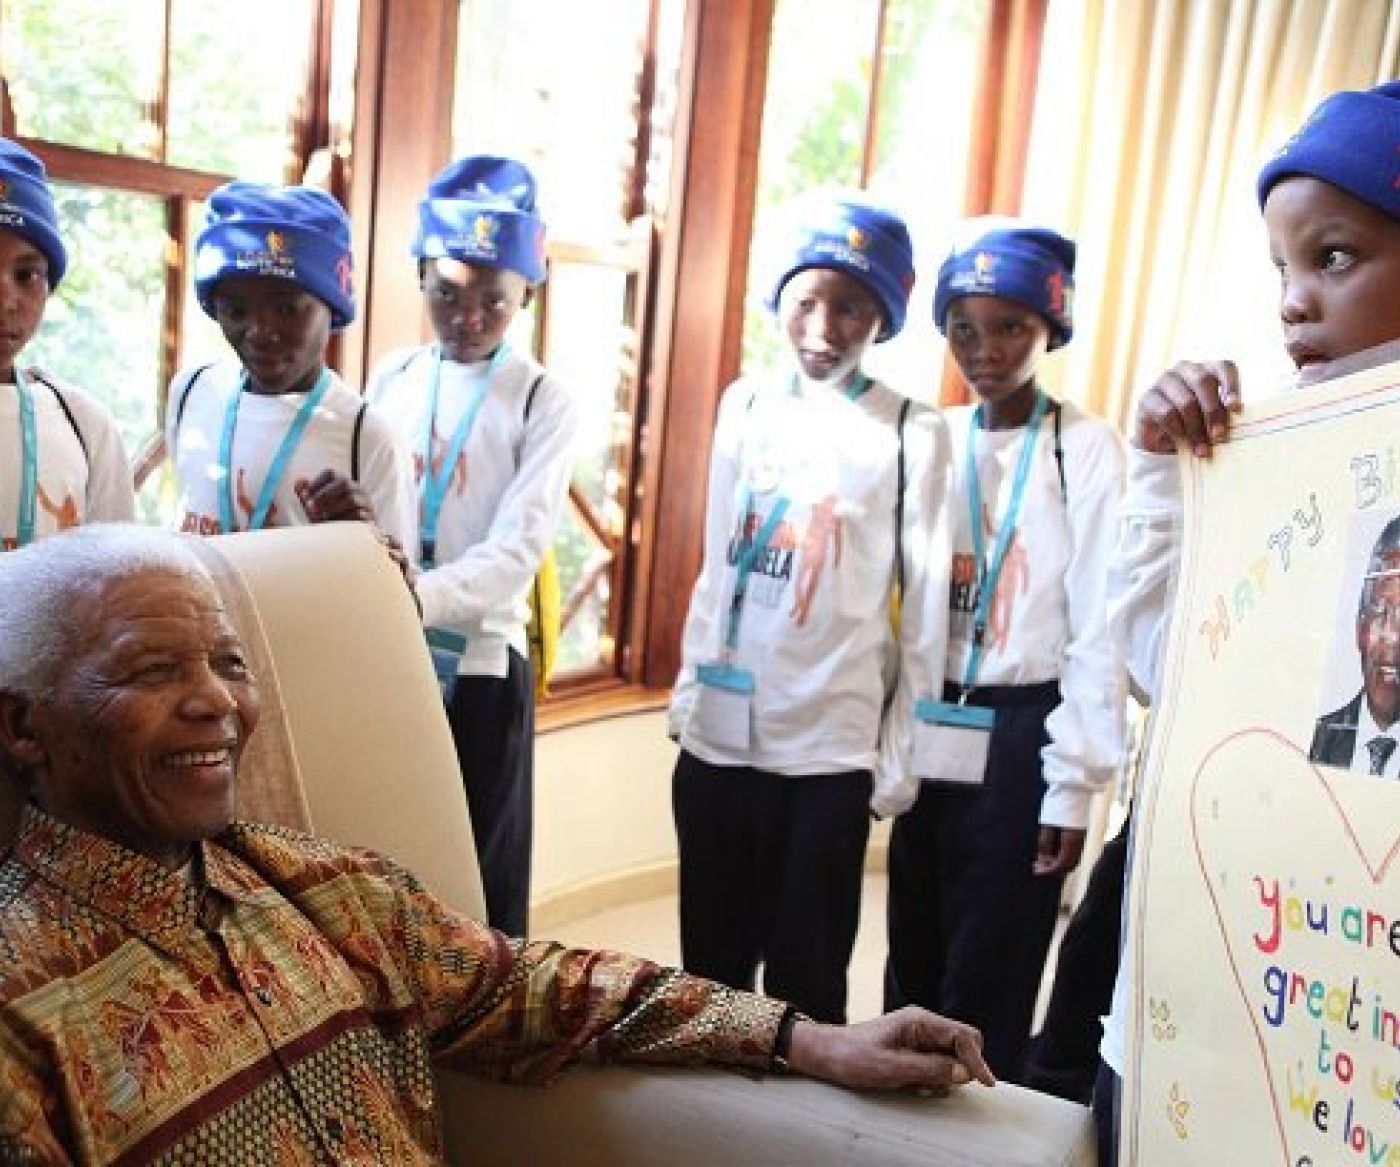 Children with Mandela on Mandela Day